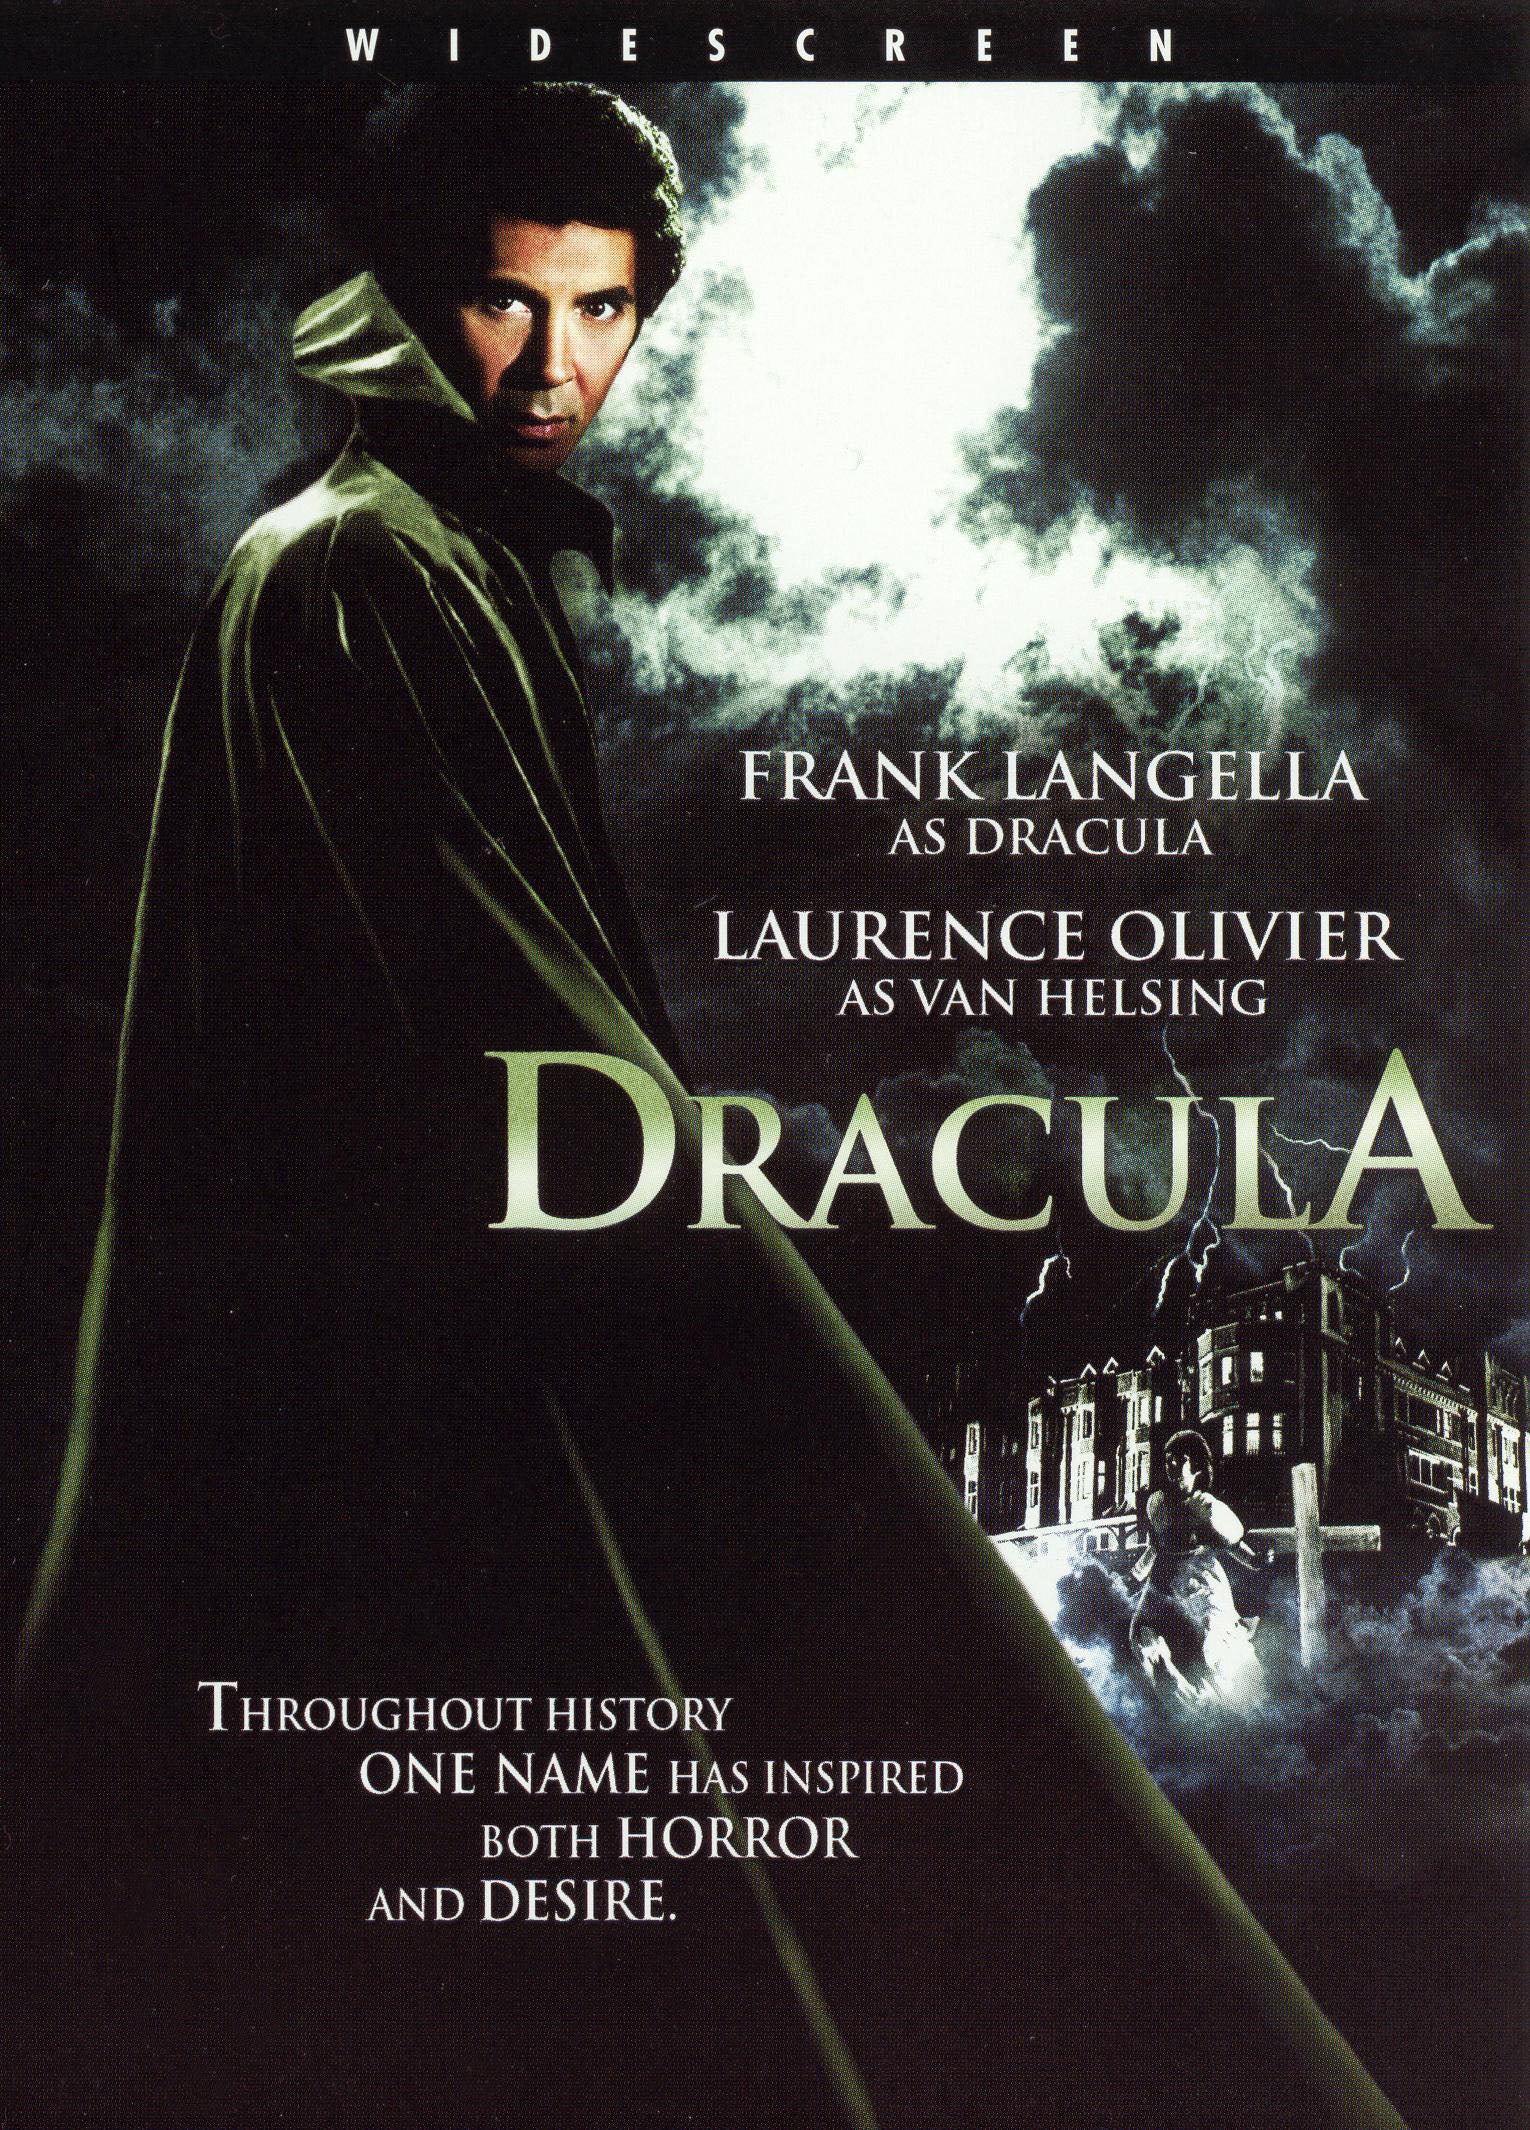 Dracula cover art